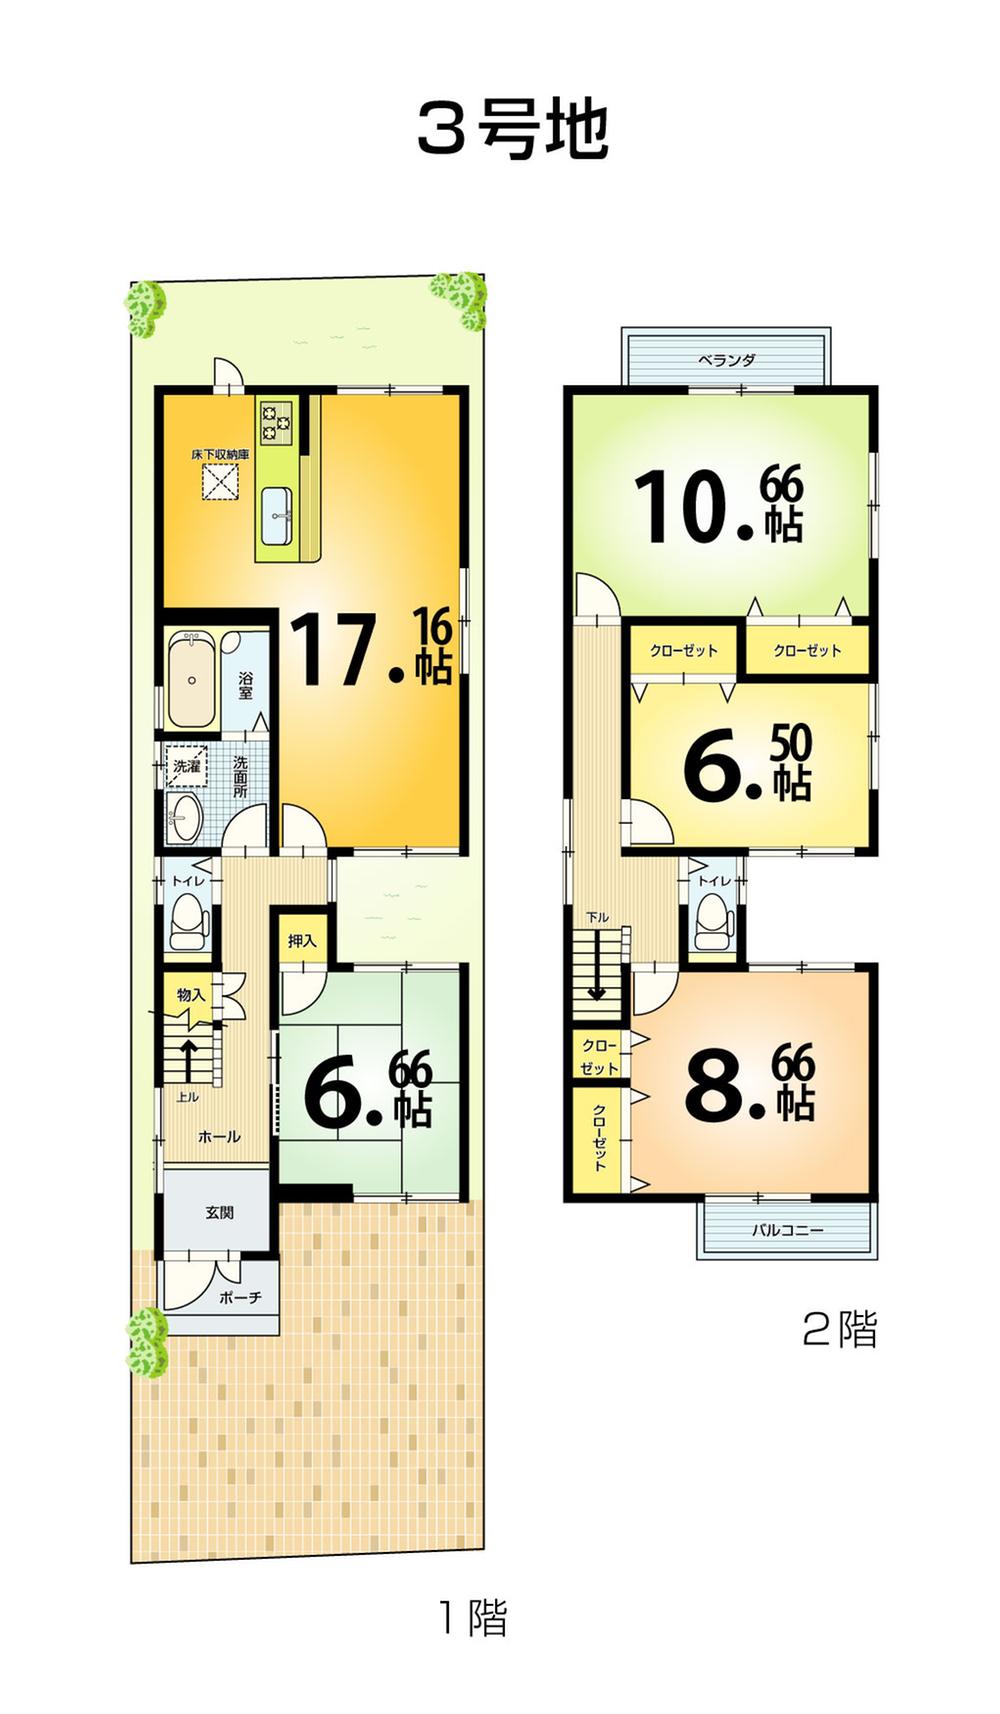 Floor plan. (No. 3 locations), Price 31.5 million yen, 4LDK, Land area 110.93 sq m , Building area 115.02 sq m